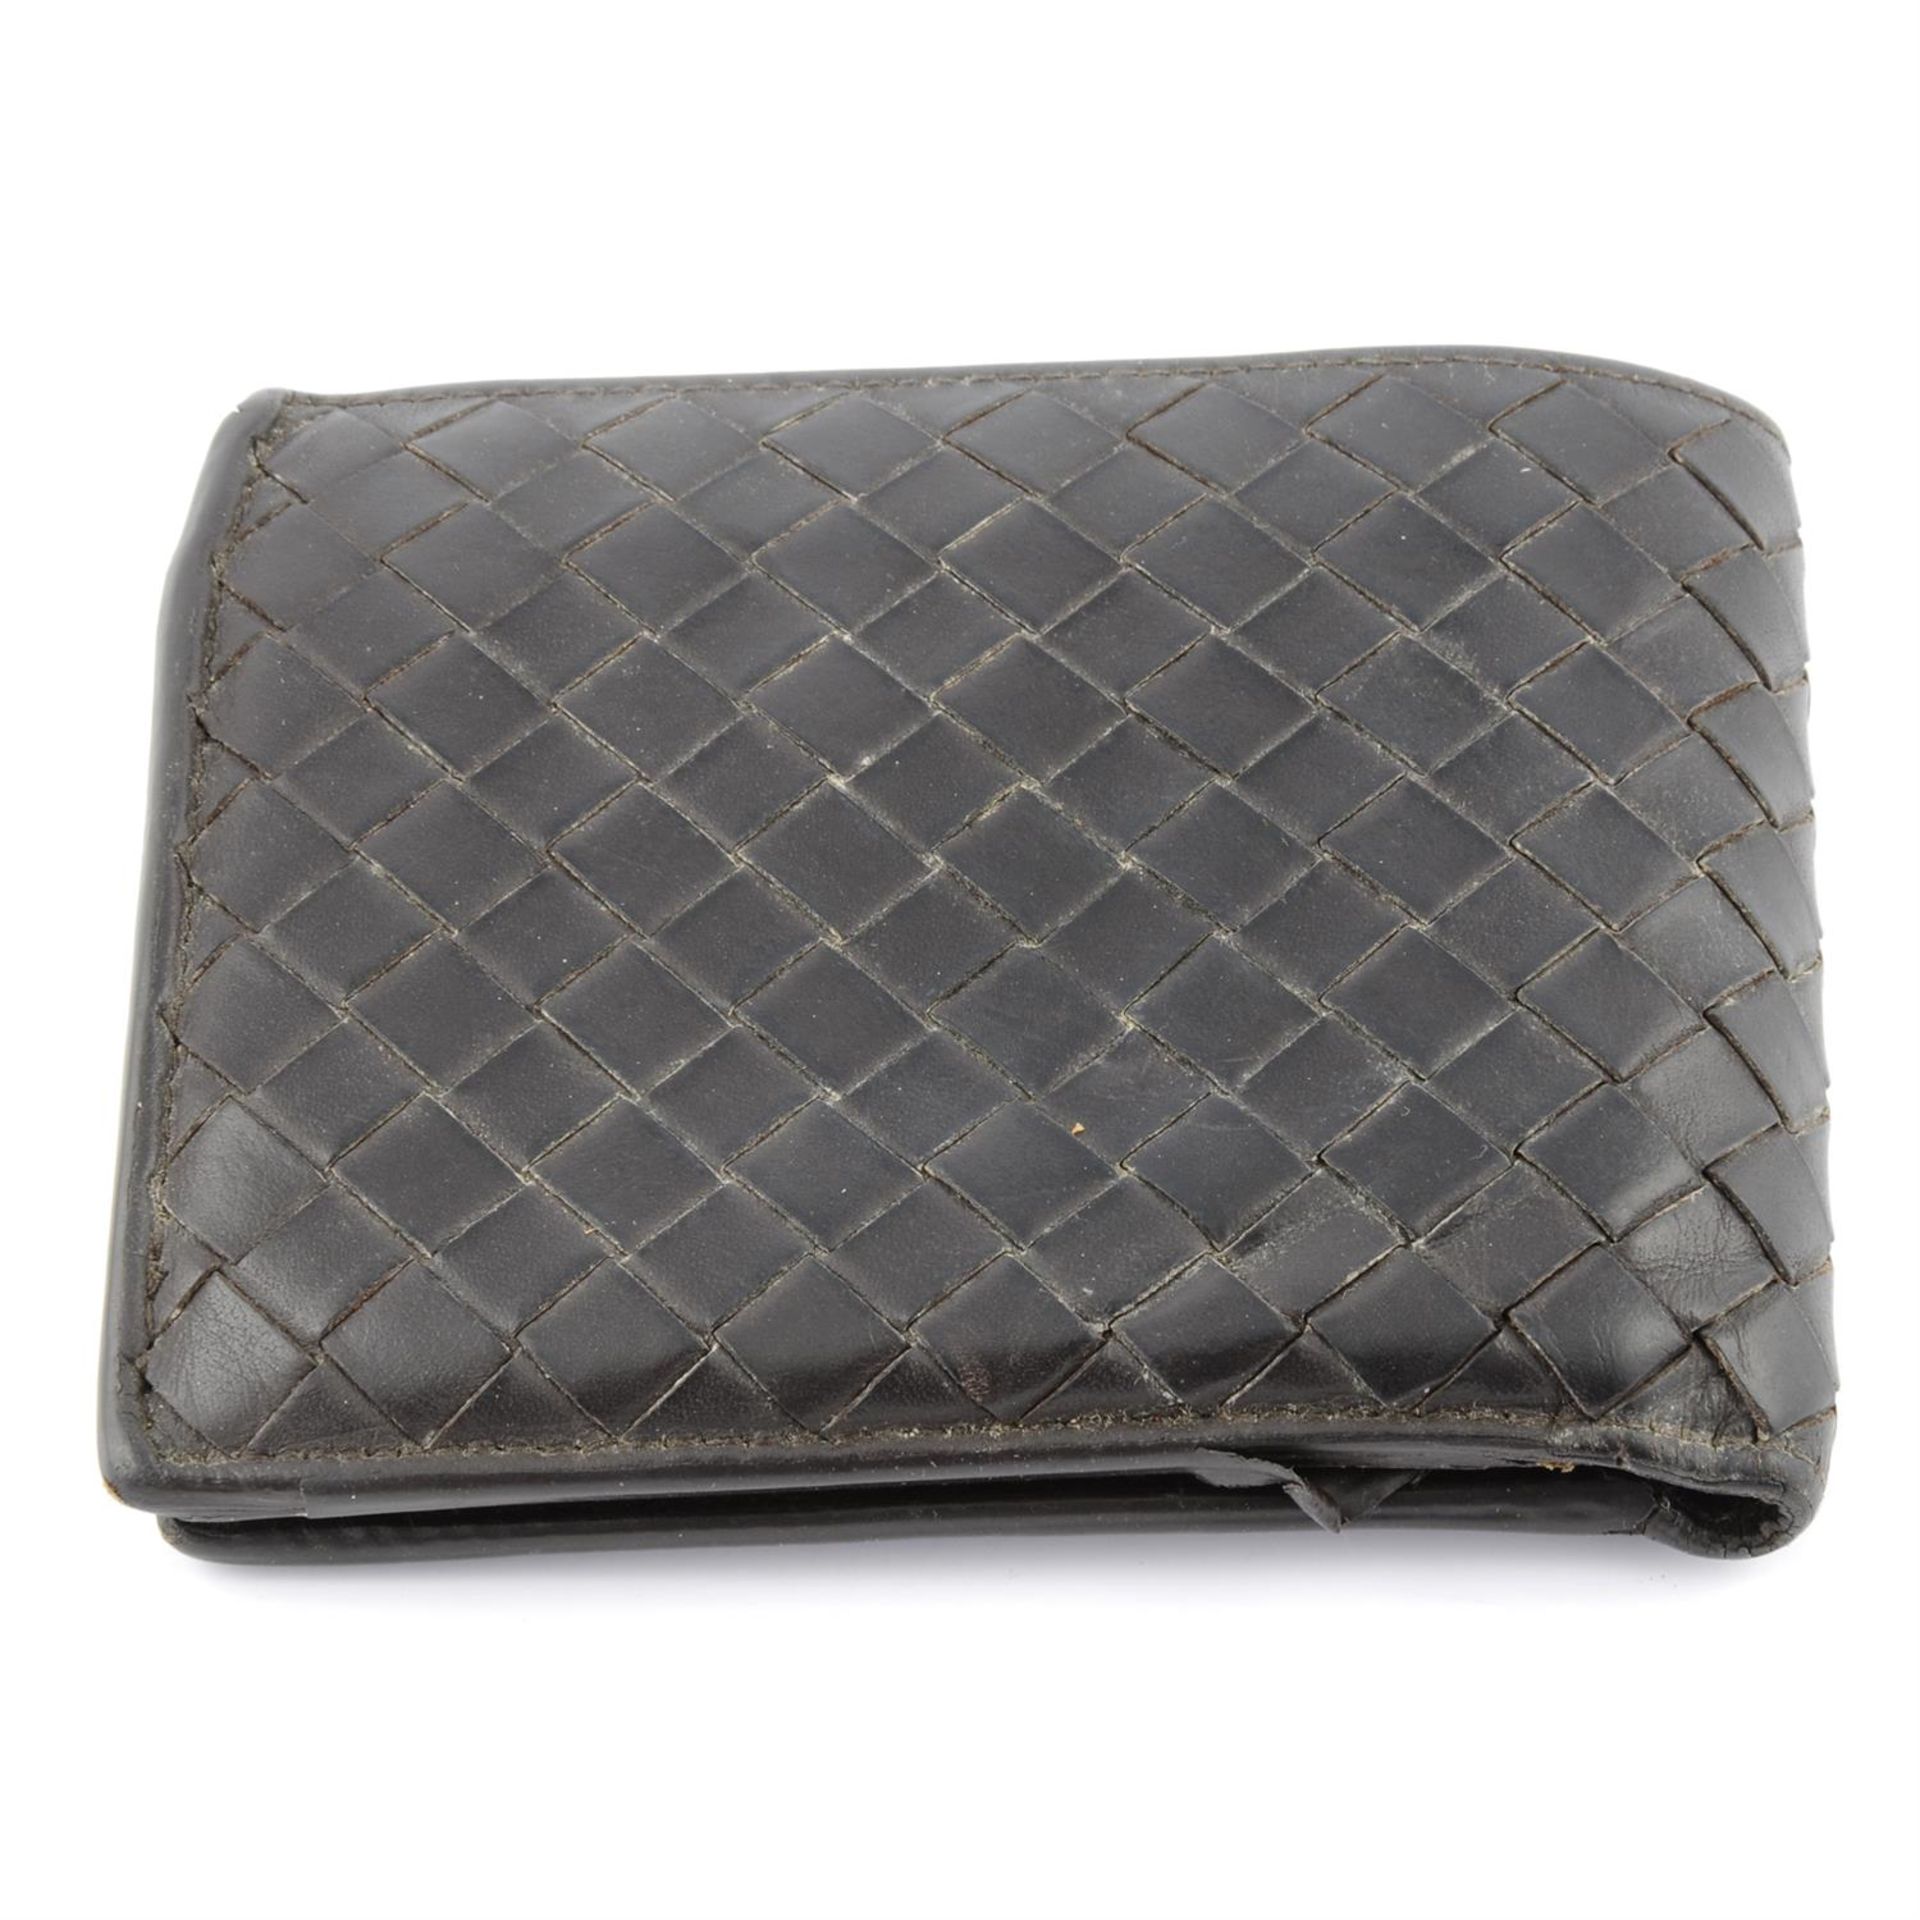 BOTTEGA VENETA - a Intrecciato leather Bifold wallet. - Image 2 of 4